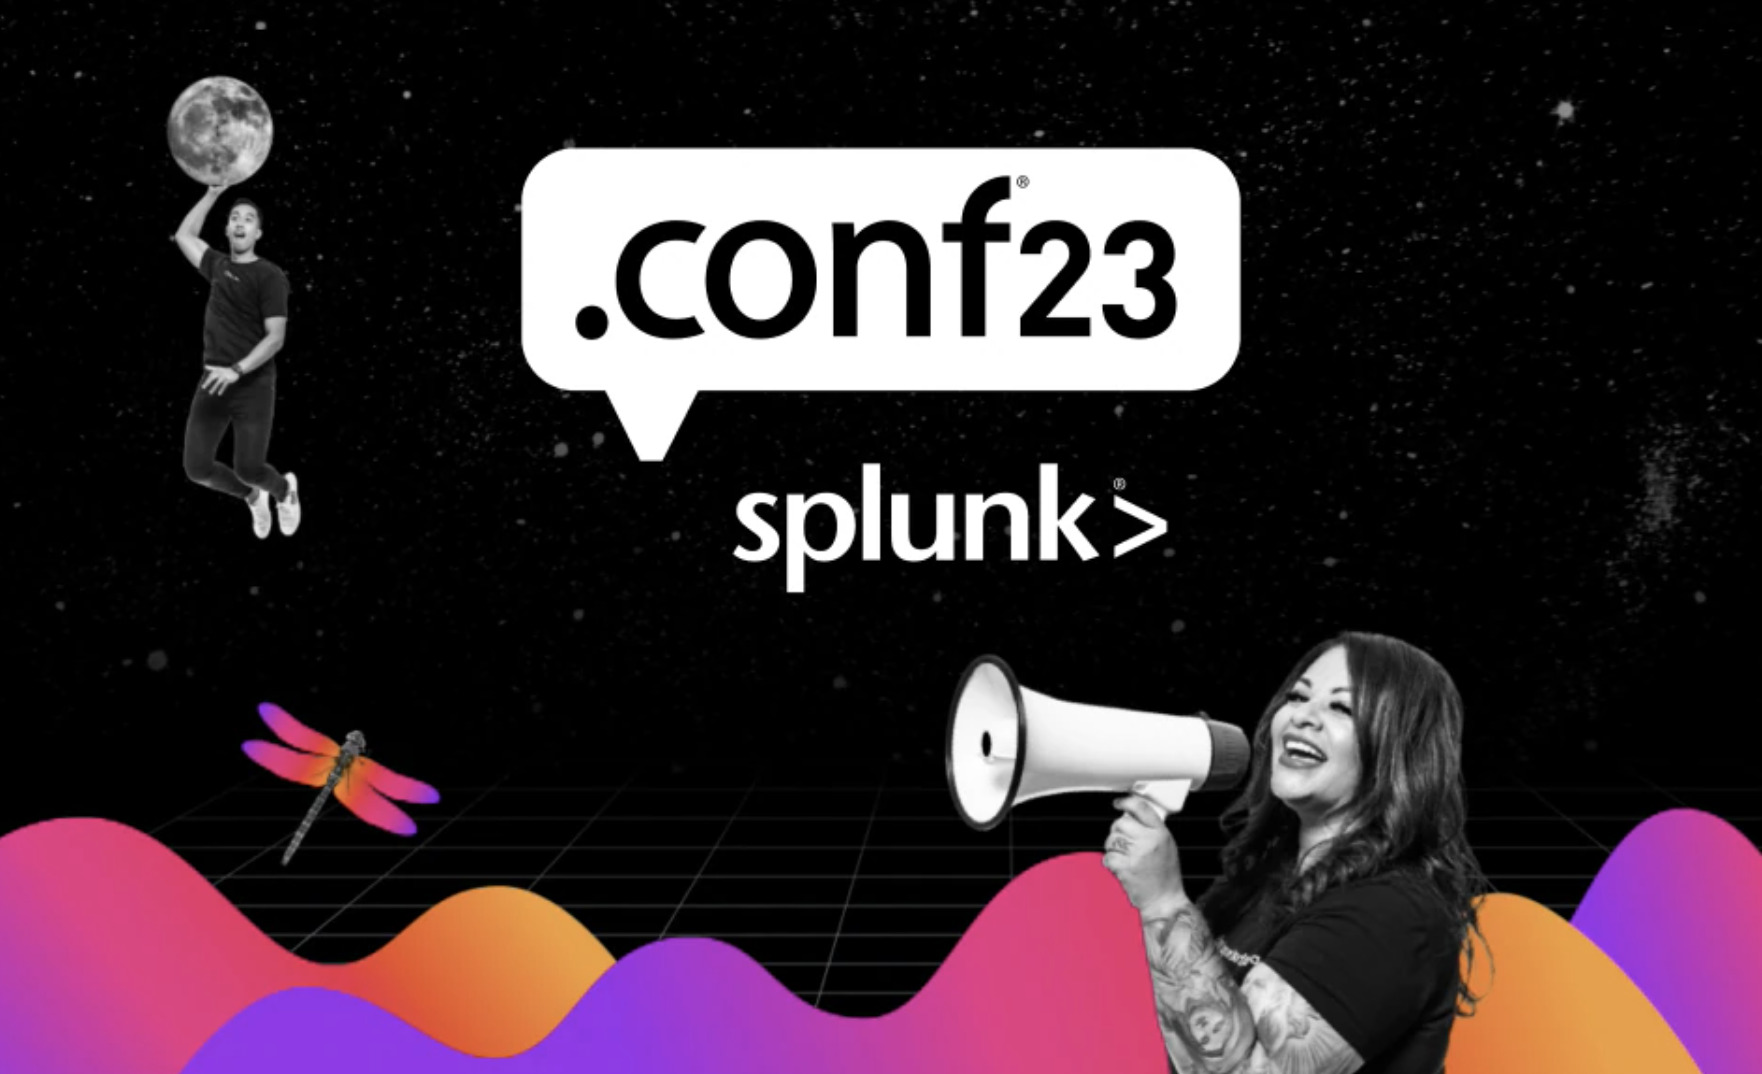 Splunk .conf23 brings core platform improvements, better visibility and